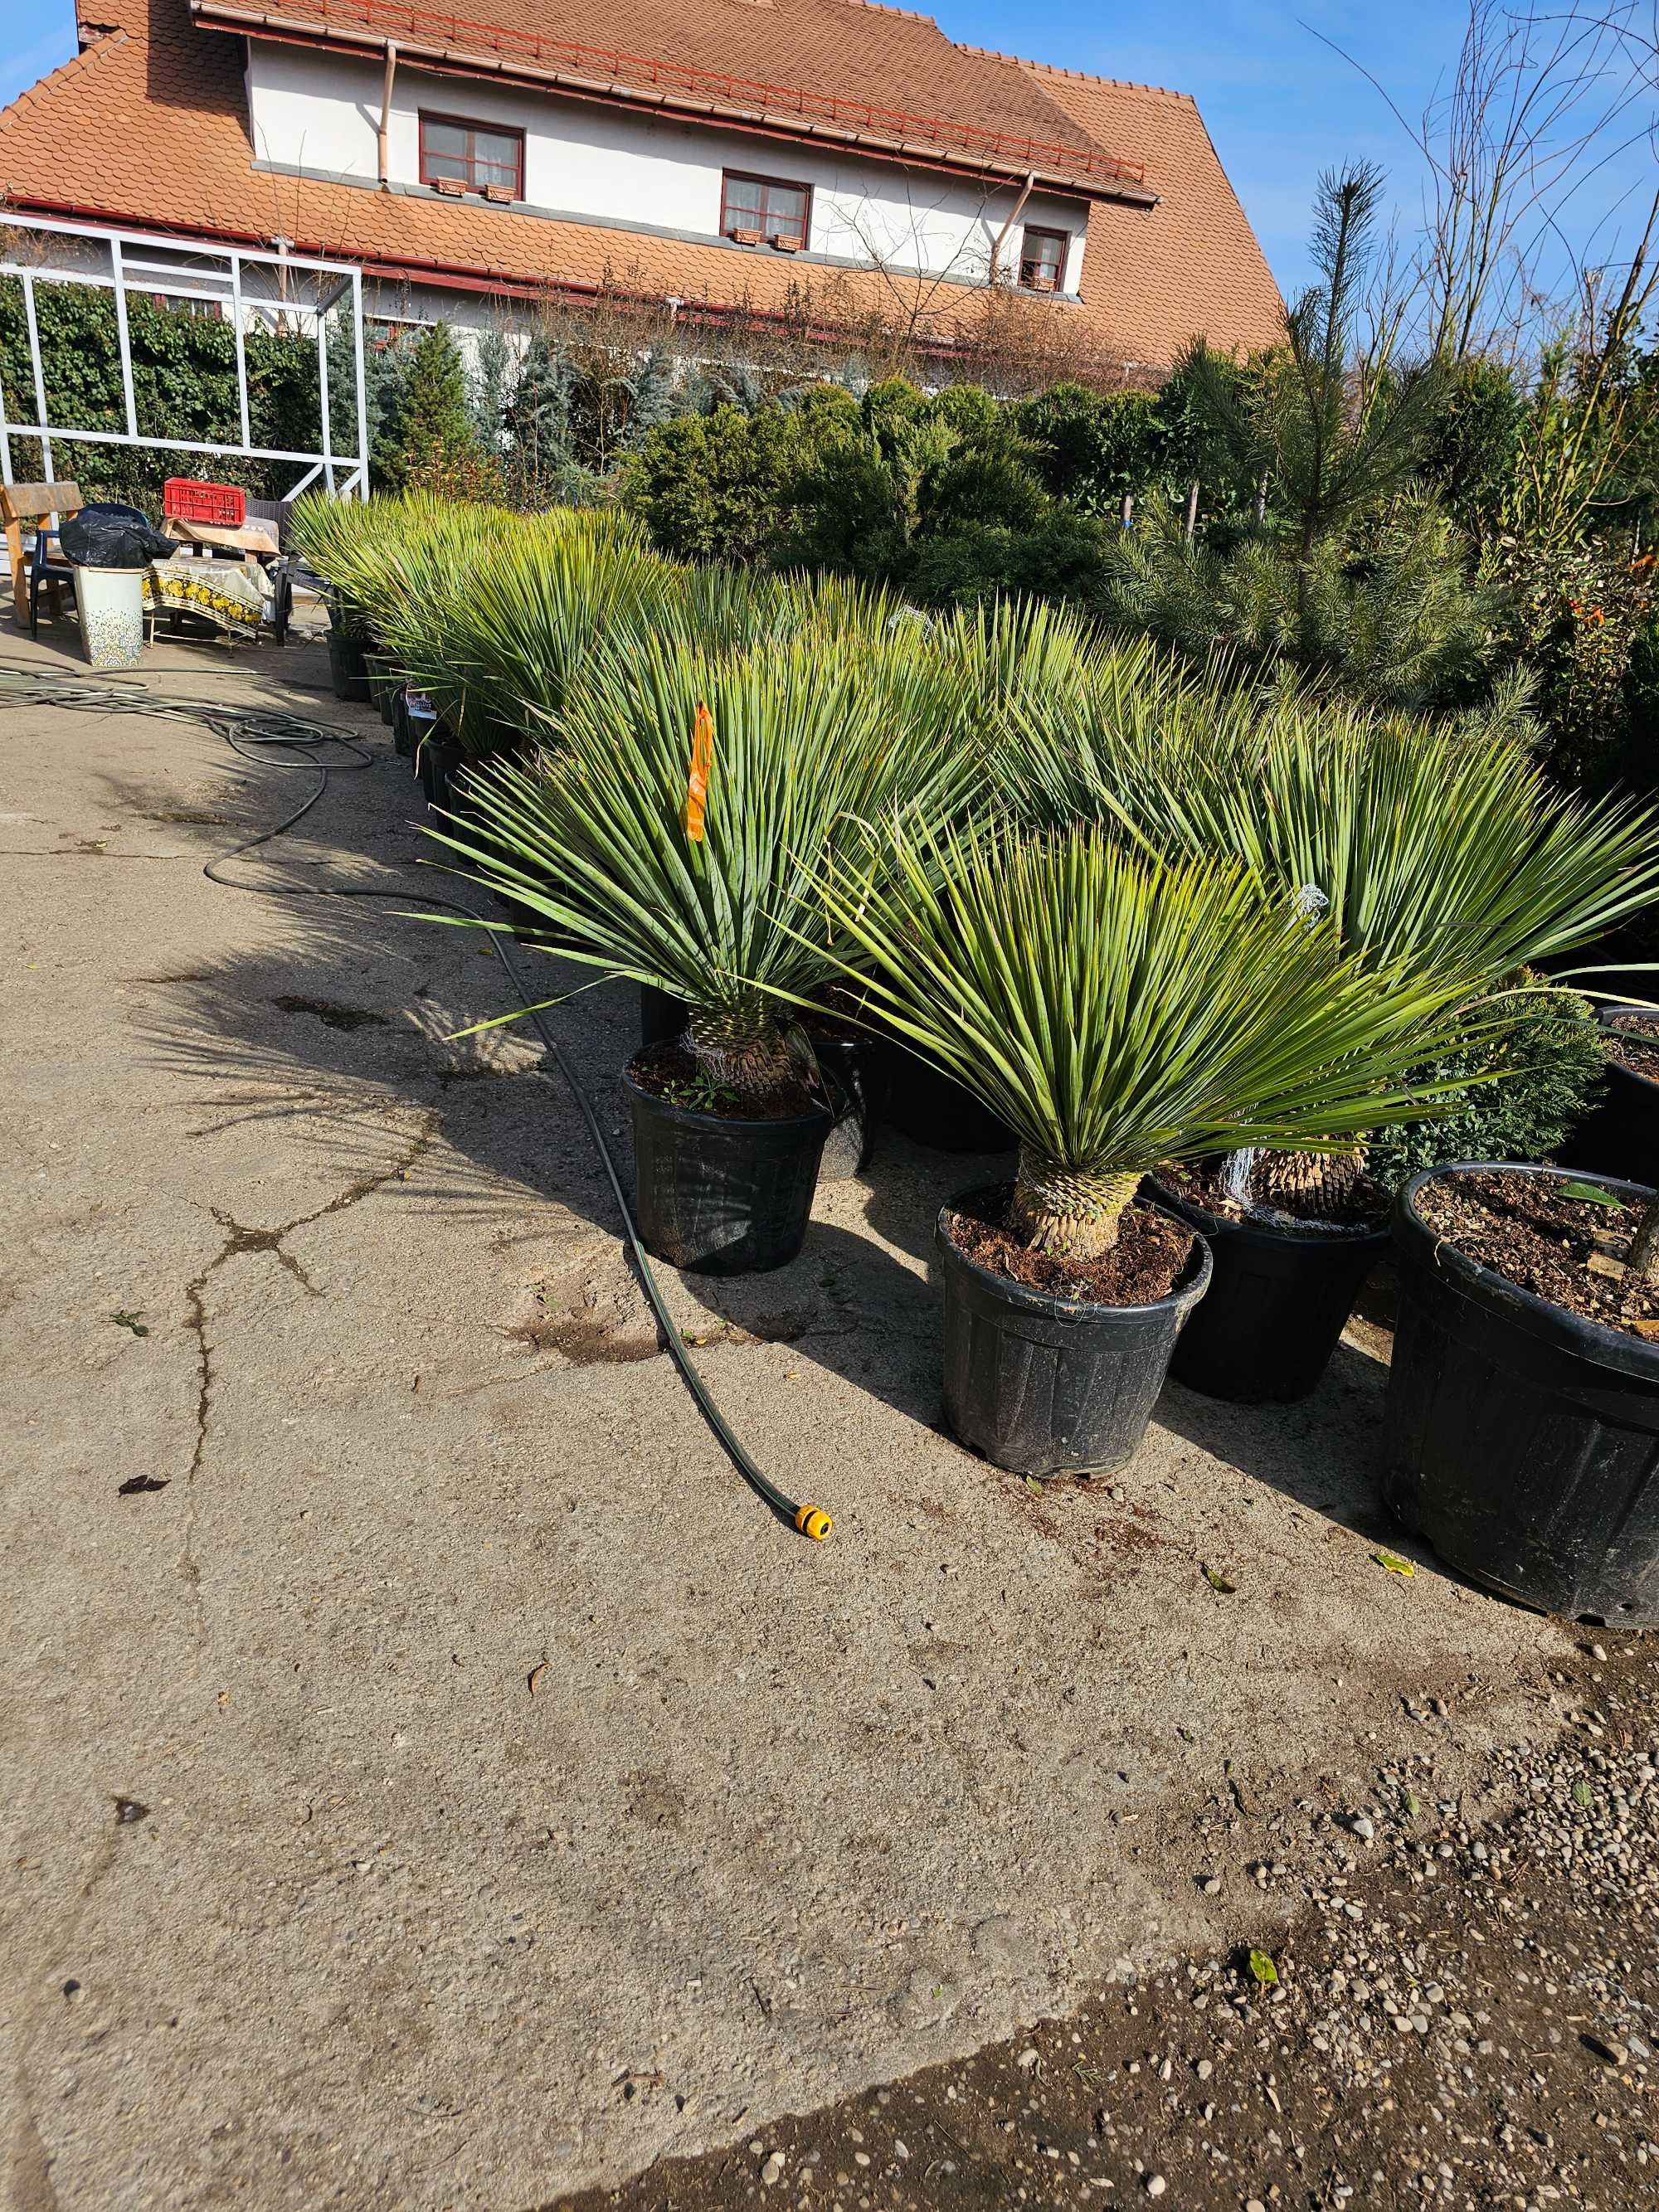 Lelandy laur englezesc tuia smarald palmieri rezistenti la îngheț